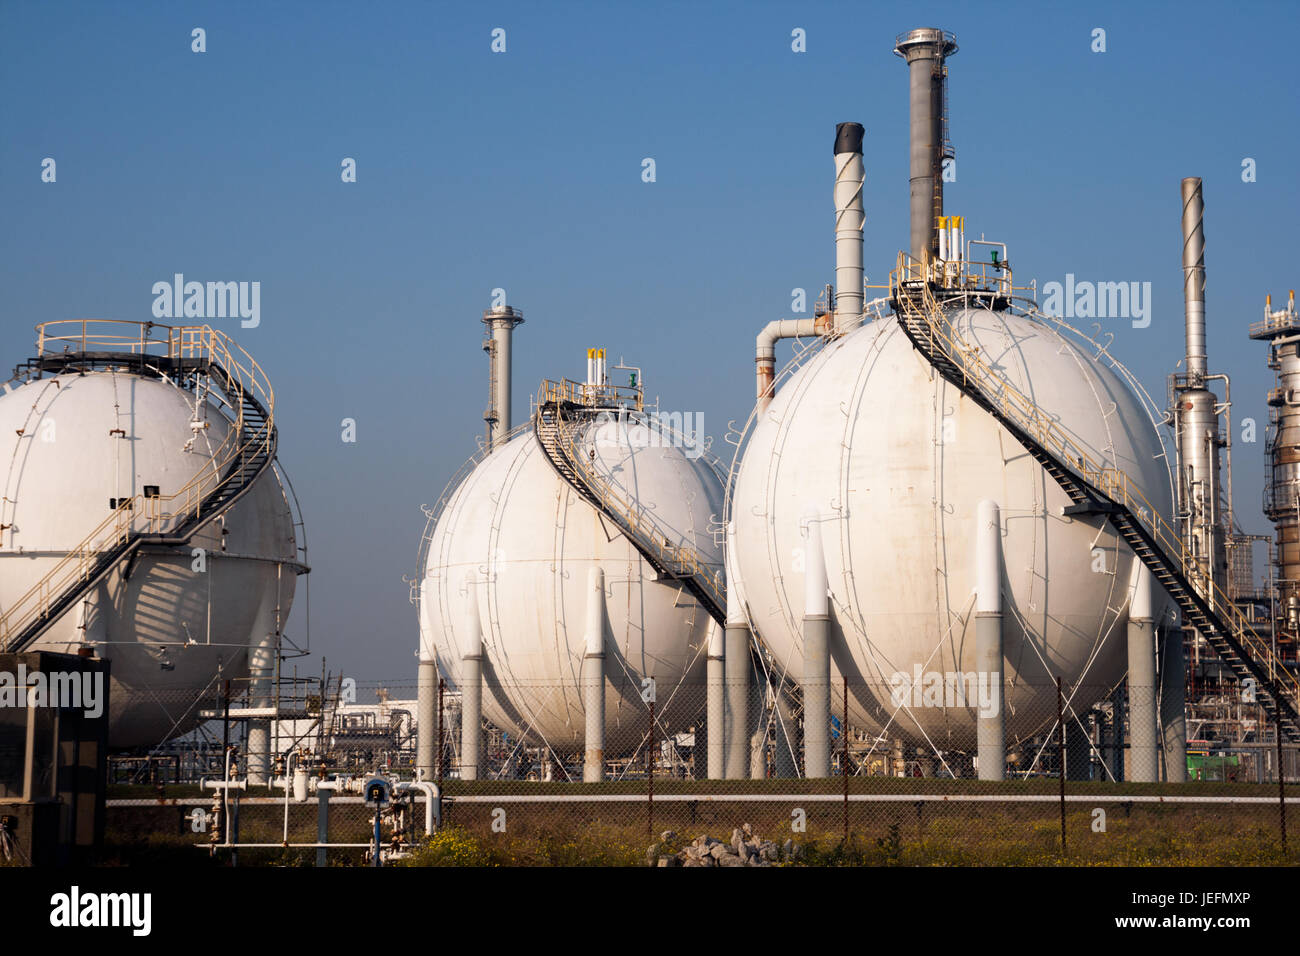 Spherical gas tank farm in a petroleum refinery. Stock Photo